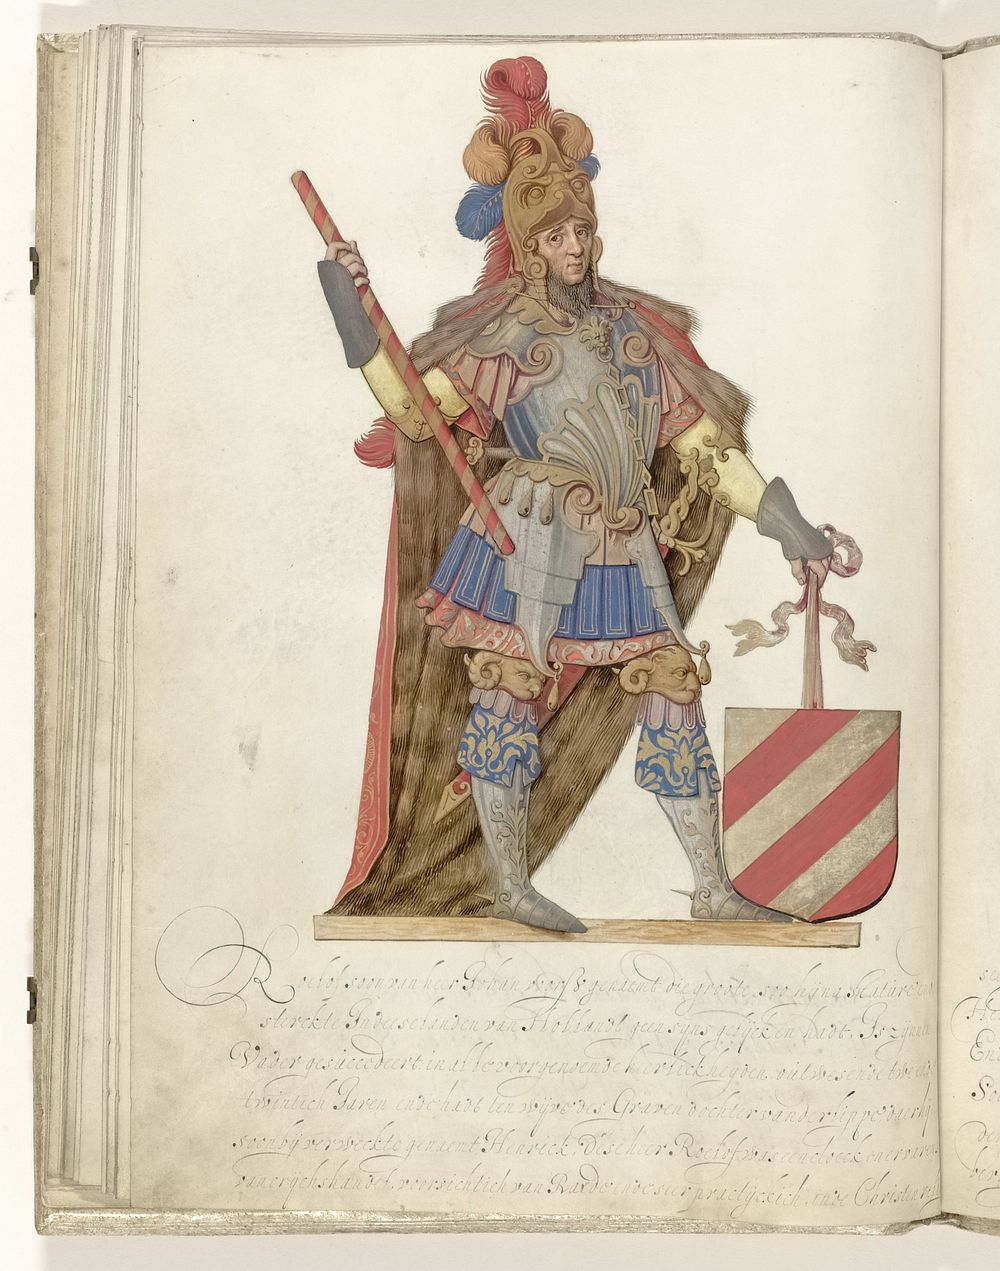 Graaf Roelof de Grote (c. 1600 - c. 1625) by Nicolaes de Kemp and anonymous